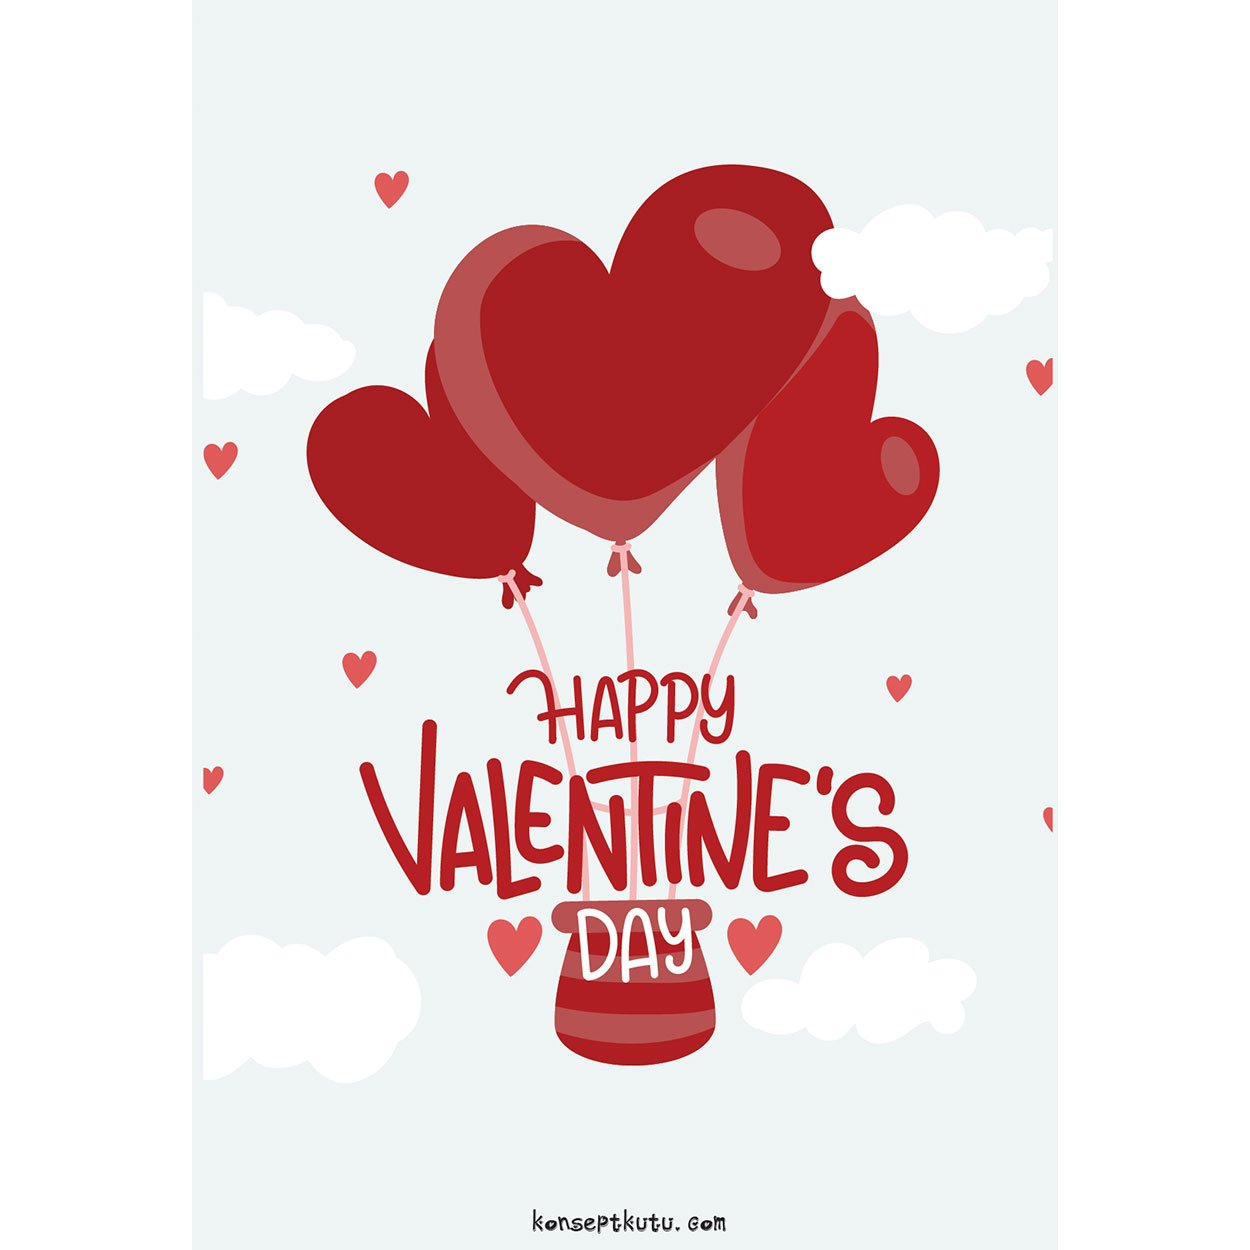 778437-happy-valentine-s-day-motto-karti